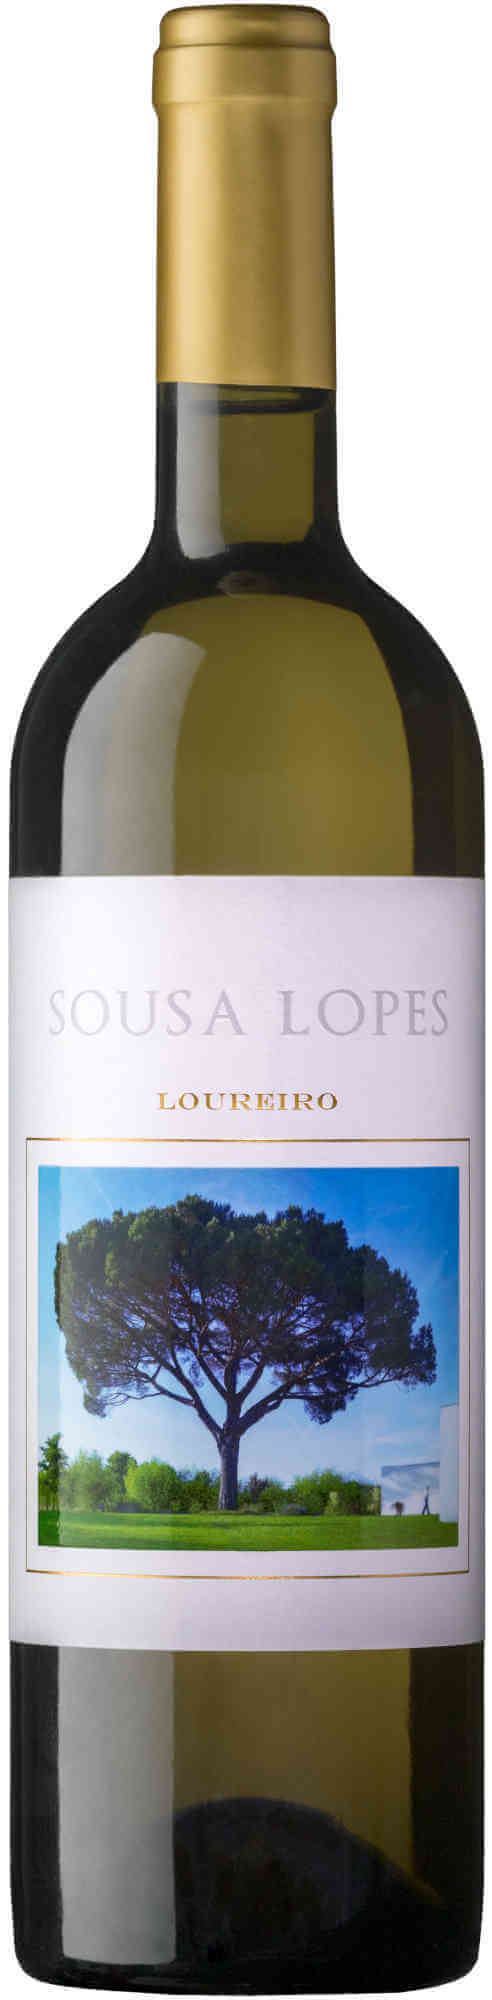 Sousa-Lopes-Loureiro